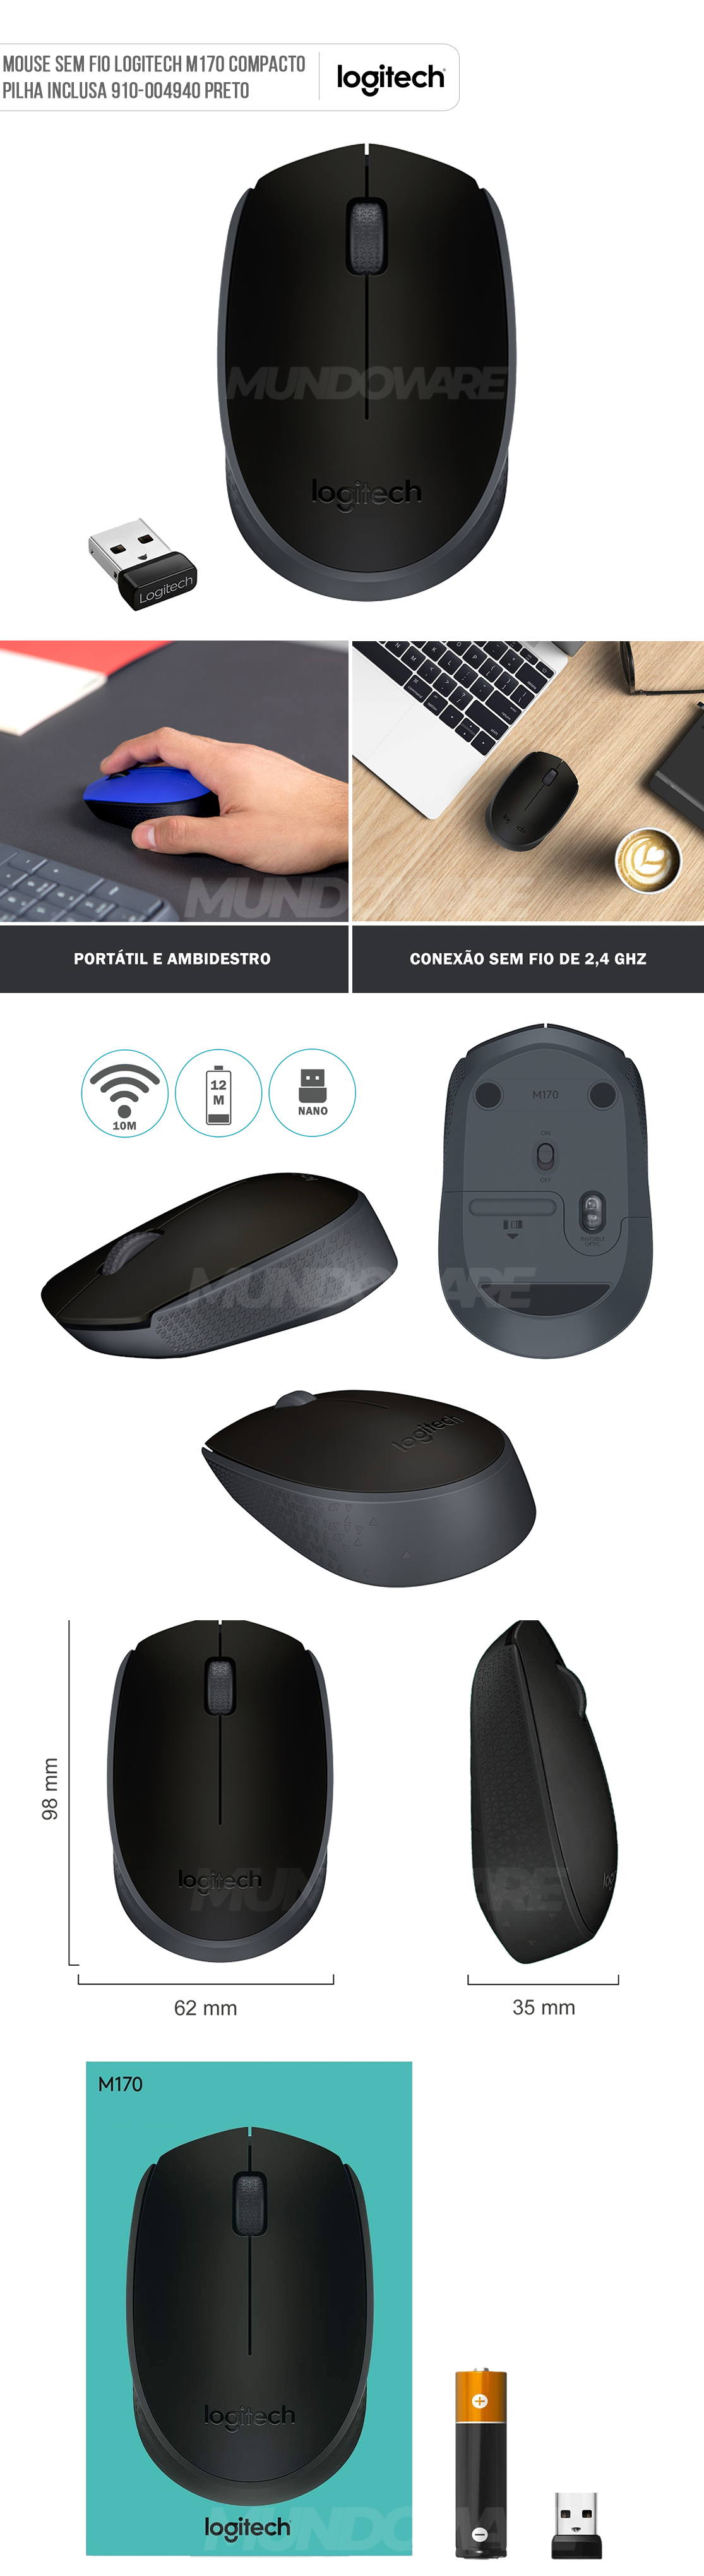 Mouse sem fio Logitech M170 Compacto Pilha Inclusa 910-004940 Wireless Preto